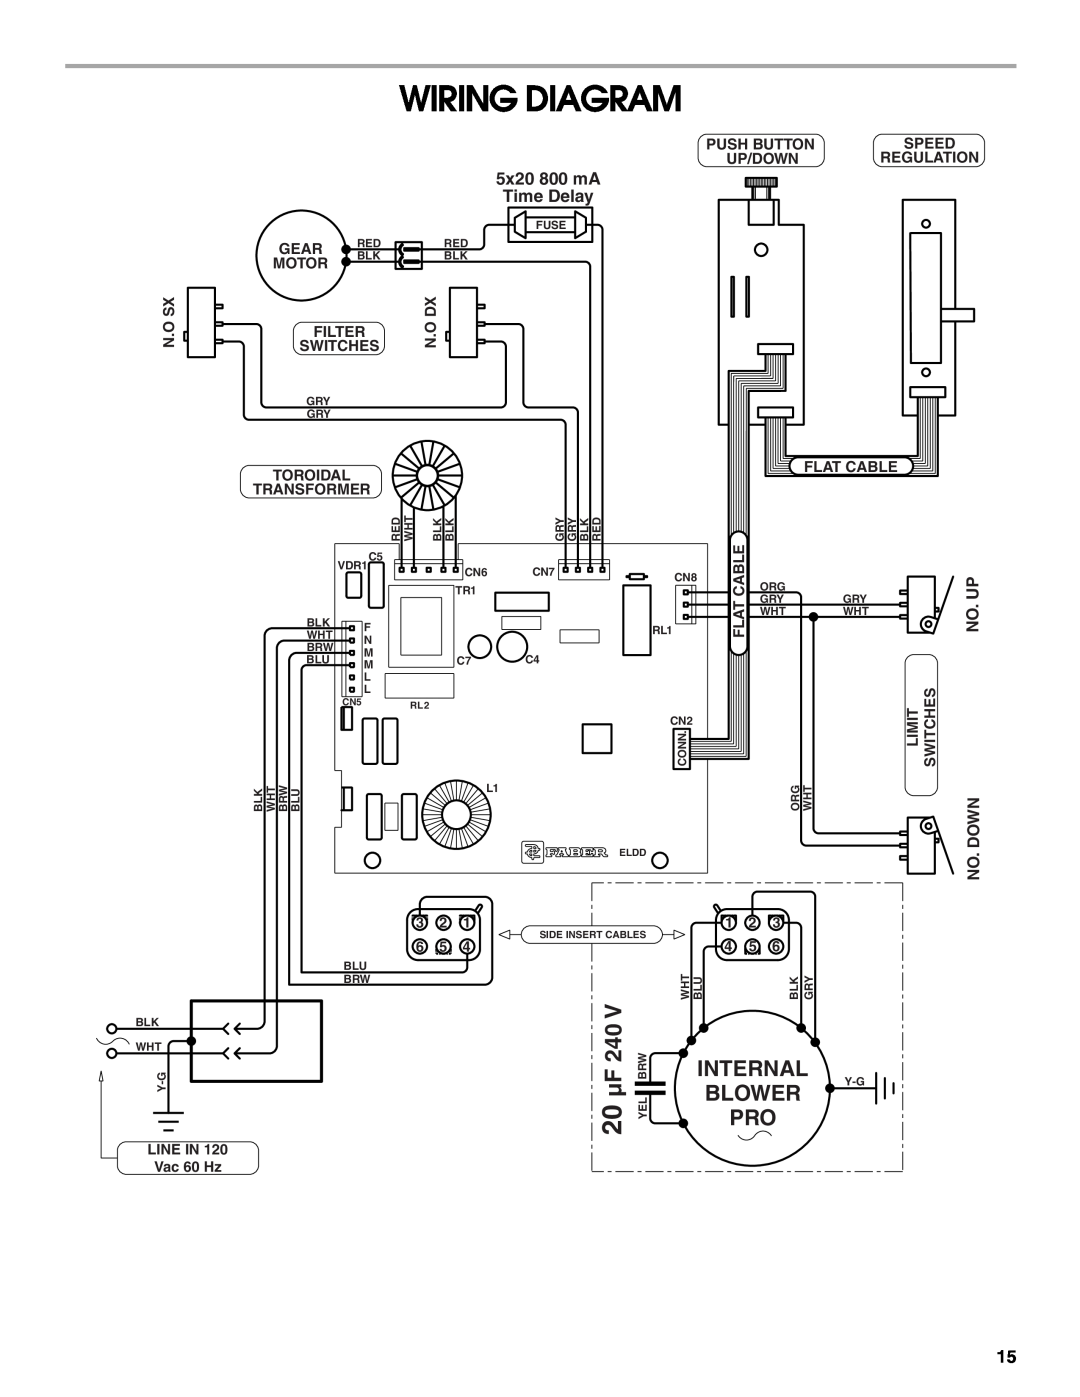 Jenn-Air W10201609B installation instructions Wiring Diagram, Blower, µF240, 5x20 800 mA Time Delay, Internal, Down 